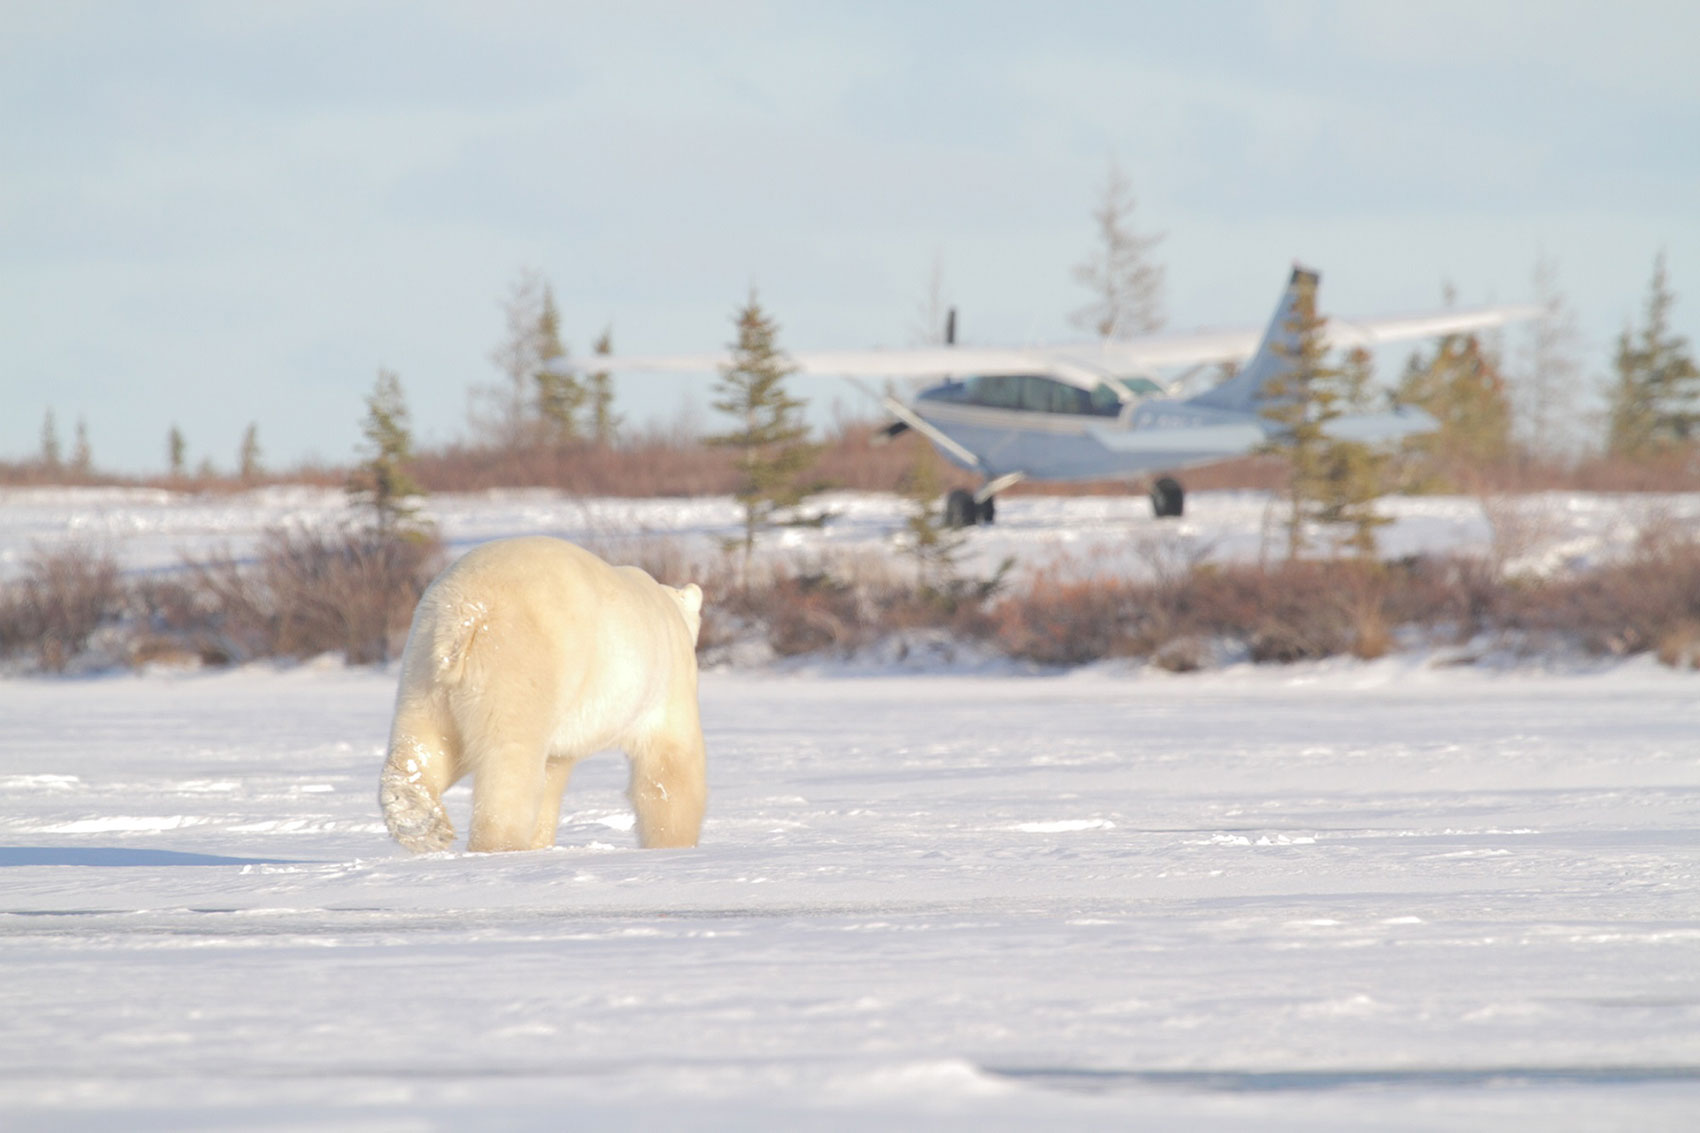 Polar bear and plane. Dymond Lake Ecolodge. Dafna Bennun photo.